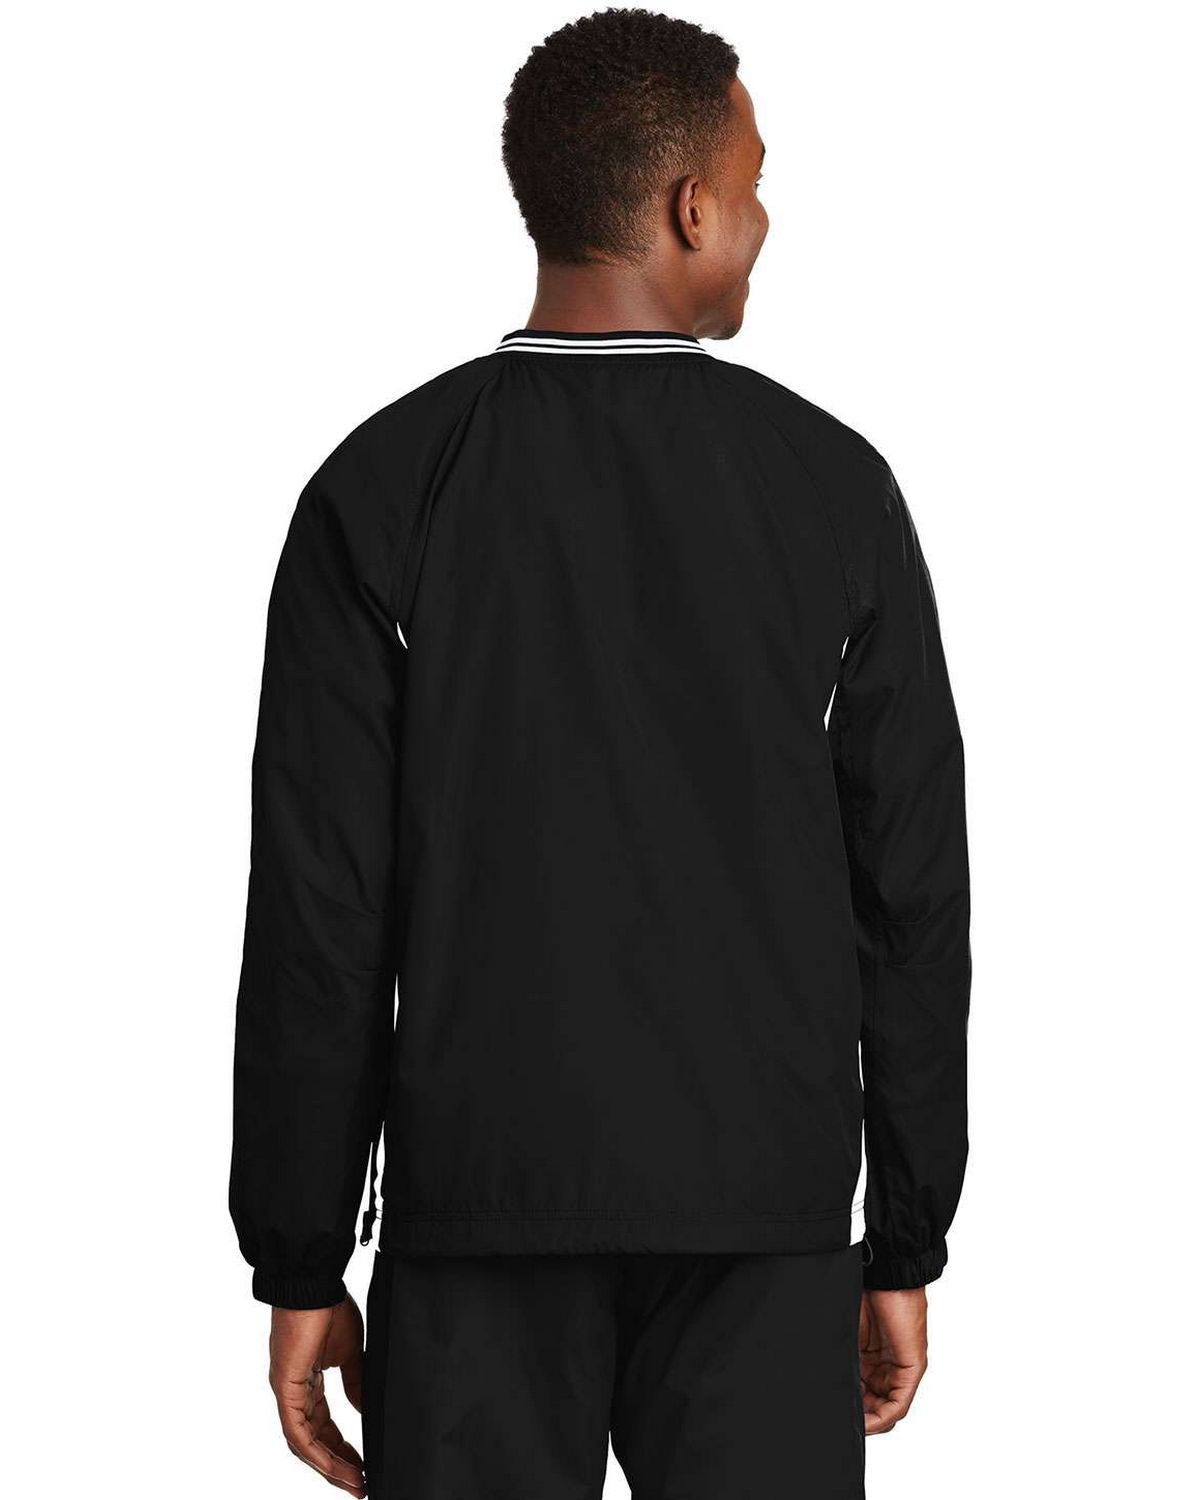 DRIEQUIP Mens V-Neck Raglan Wind Shirt Sizes XS-6XL 